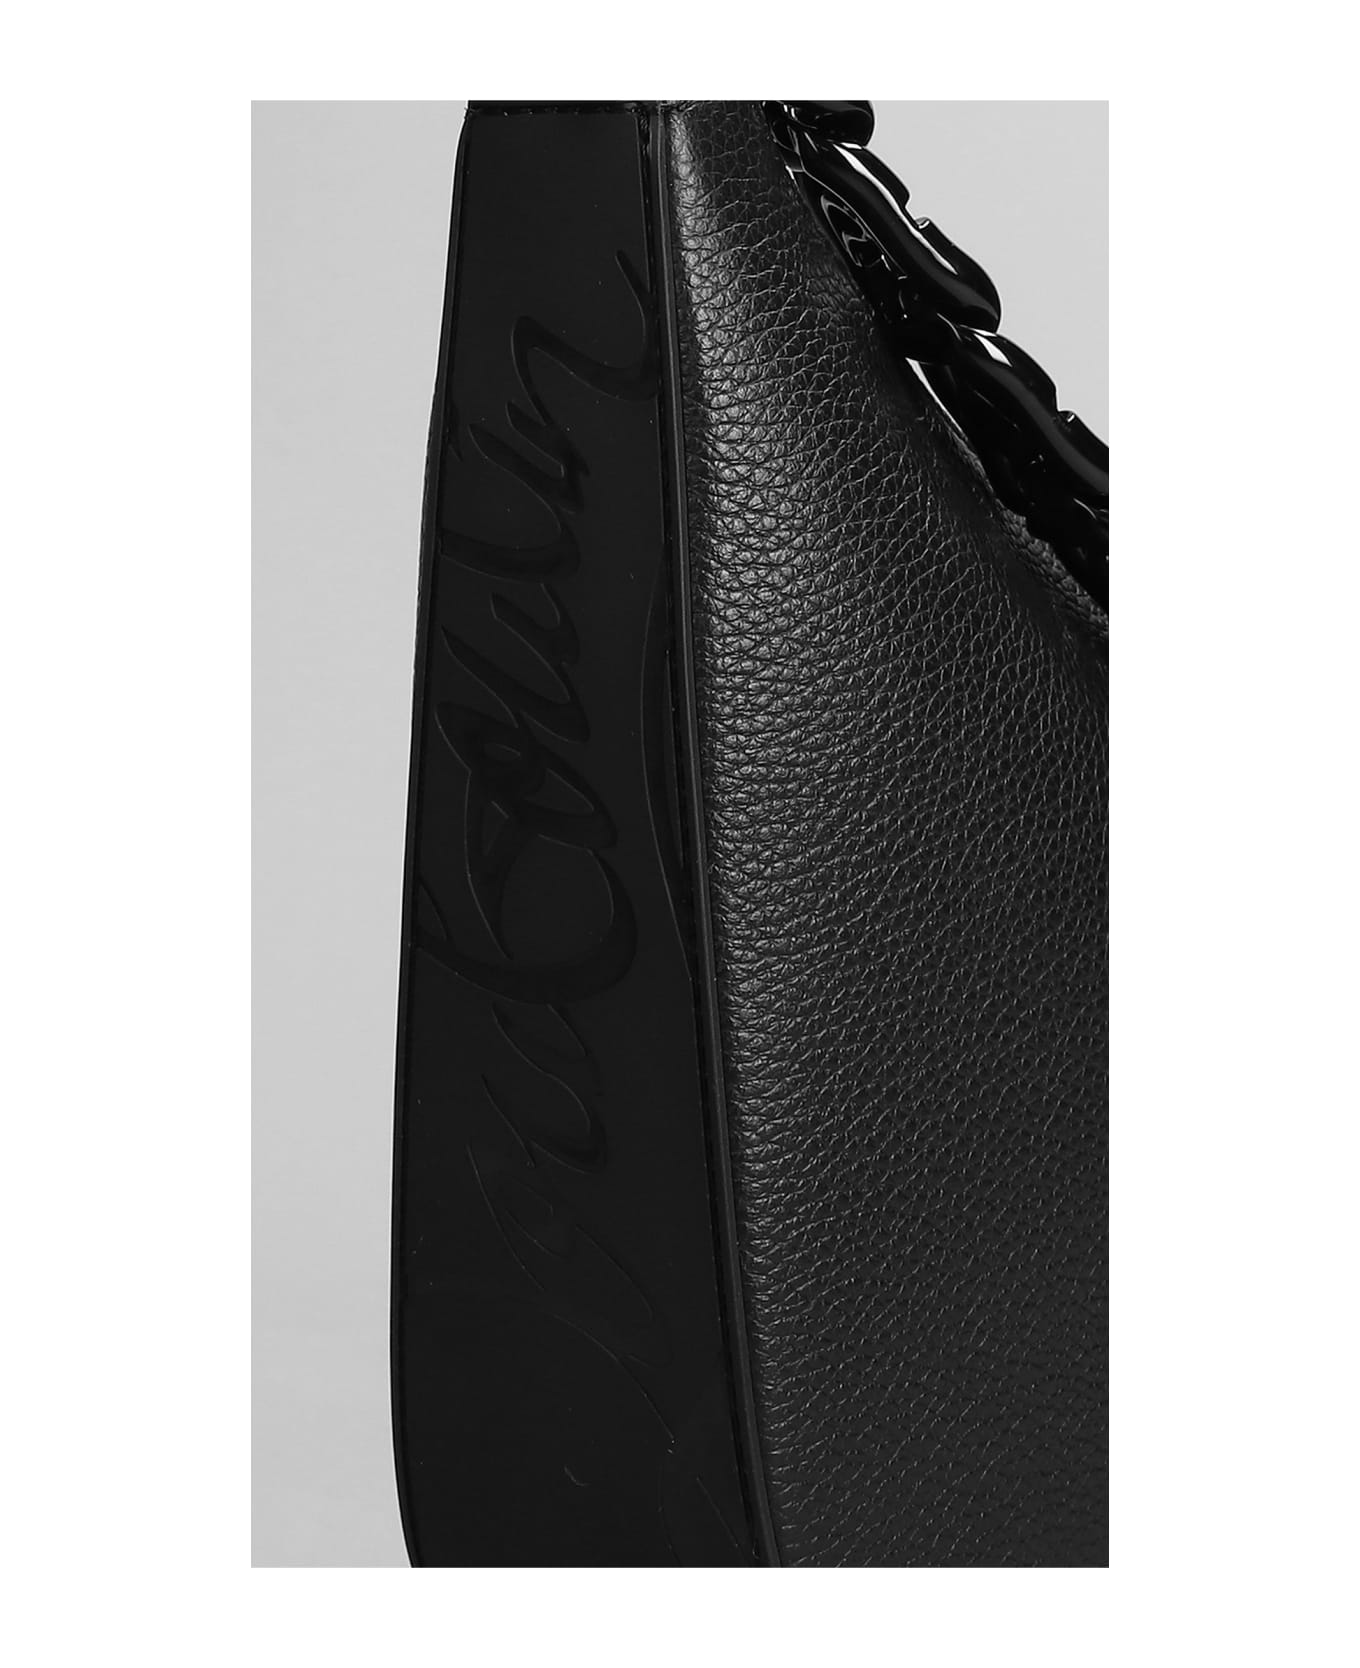 Christian Louboutin Loubila Chain Shoulder Bag In Black Leather - black